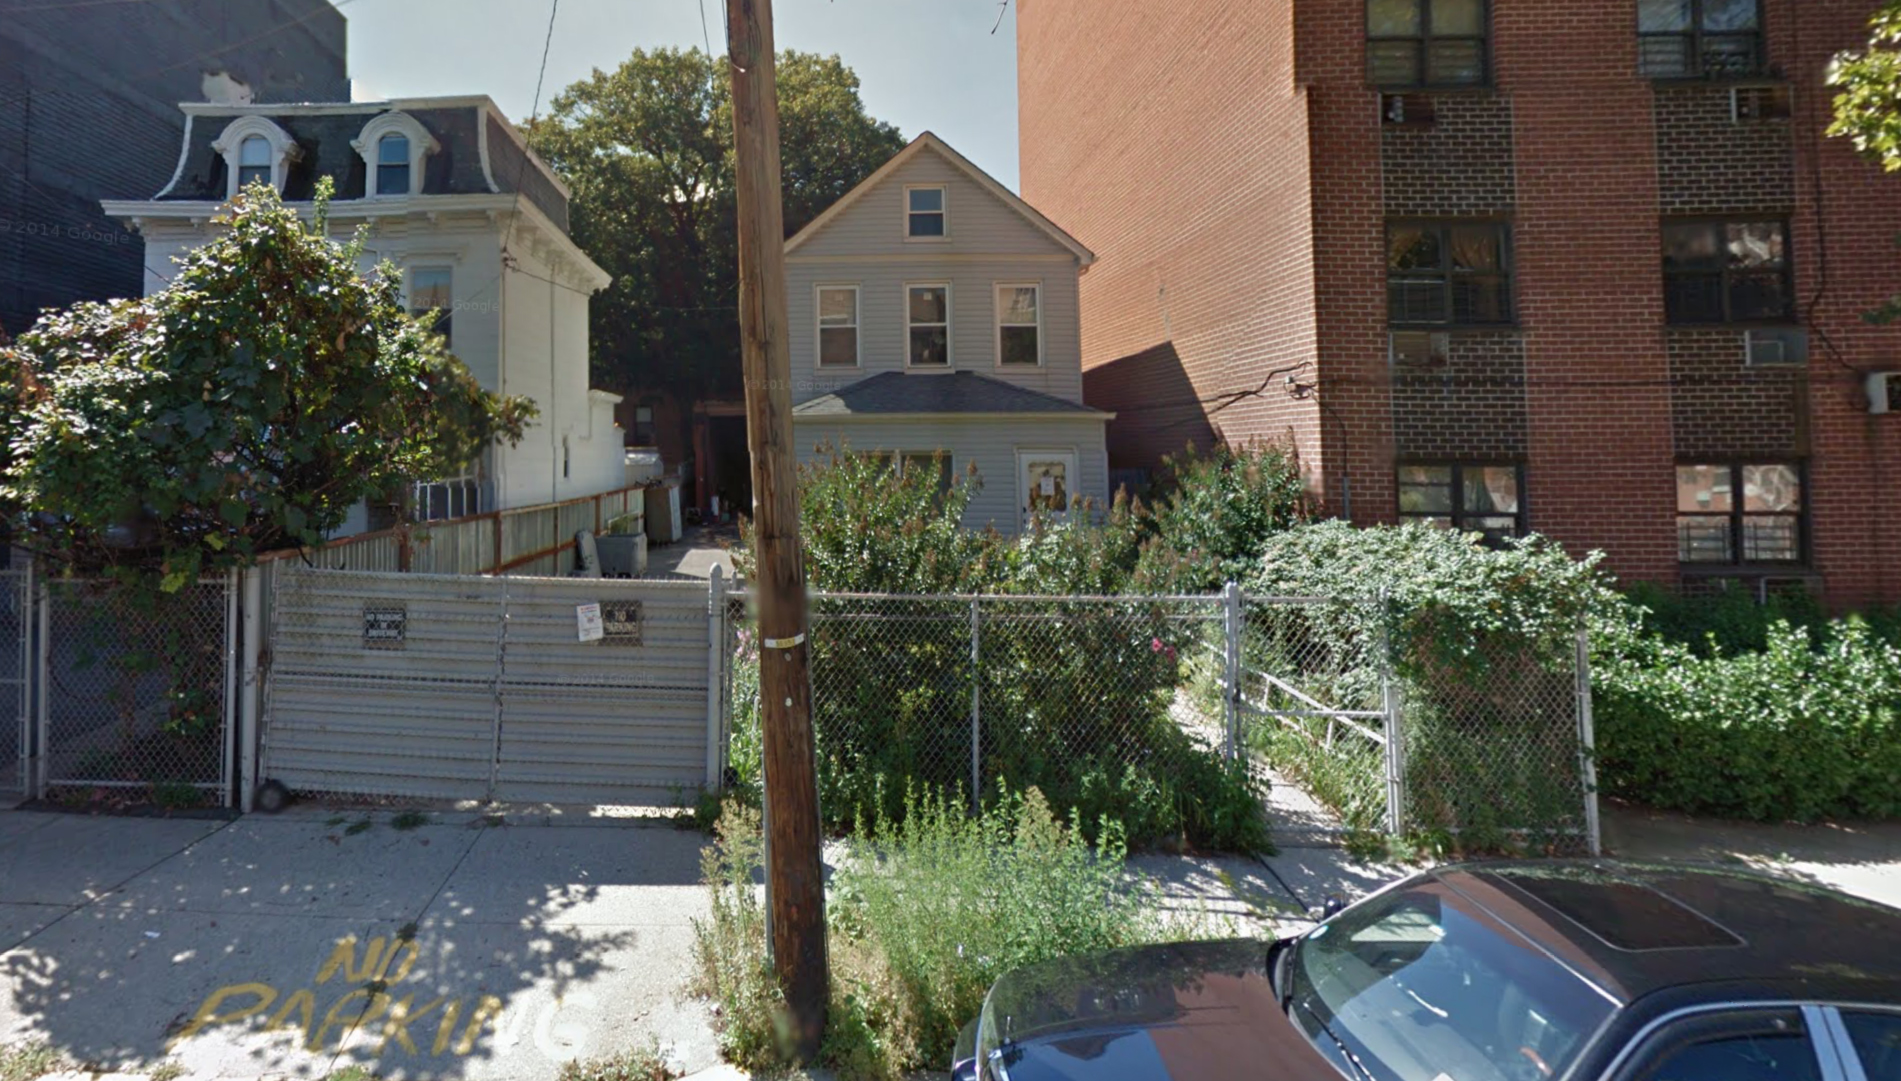 139-20 34th Avenue. Via Google Maps.